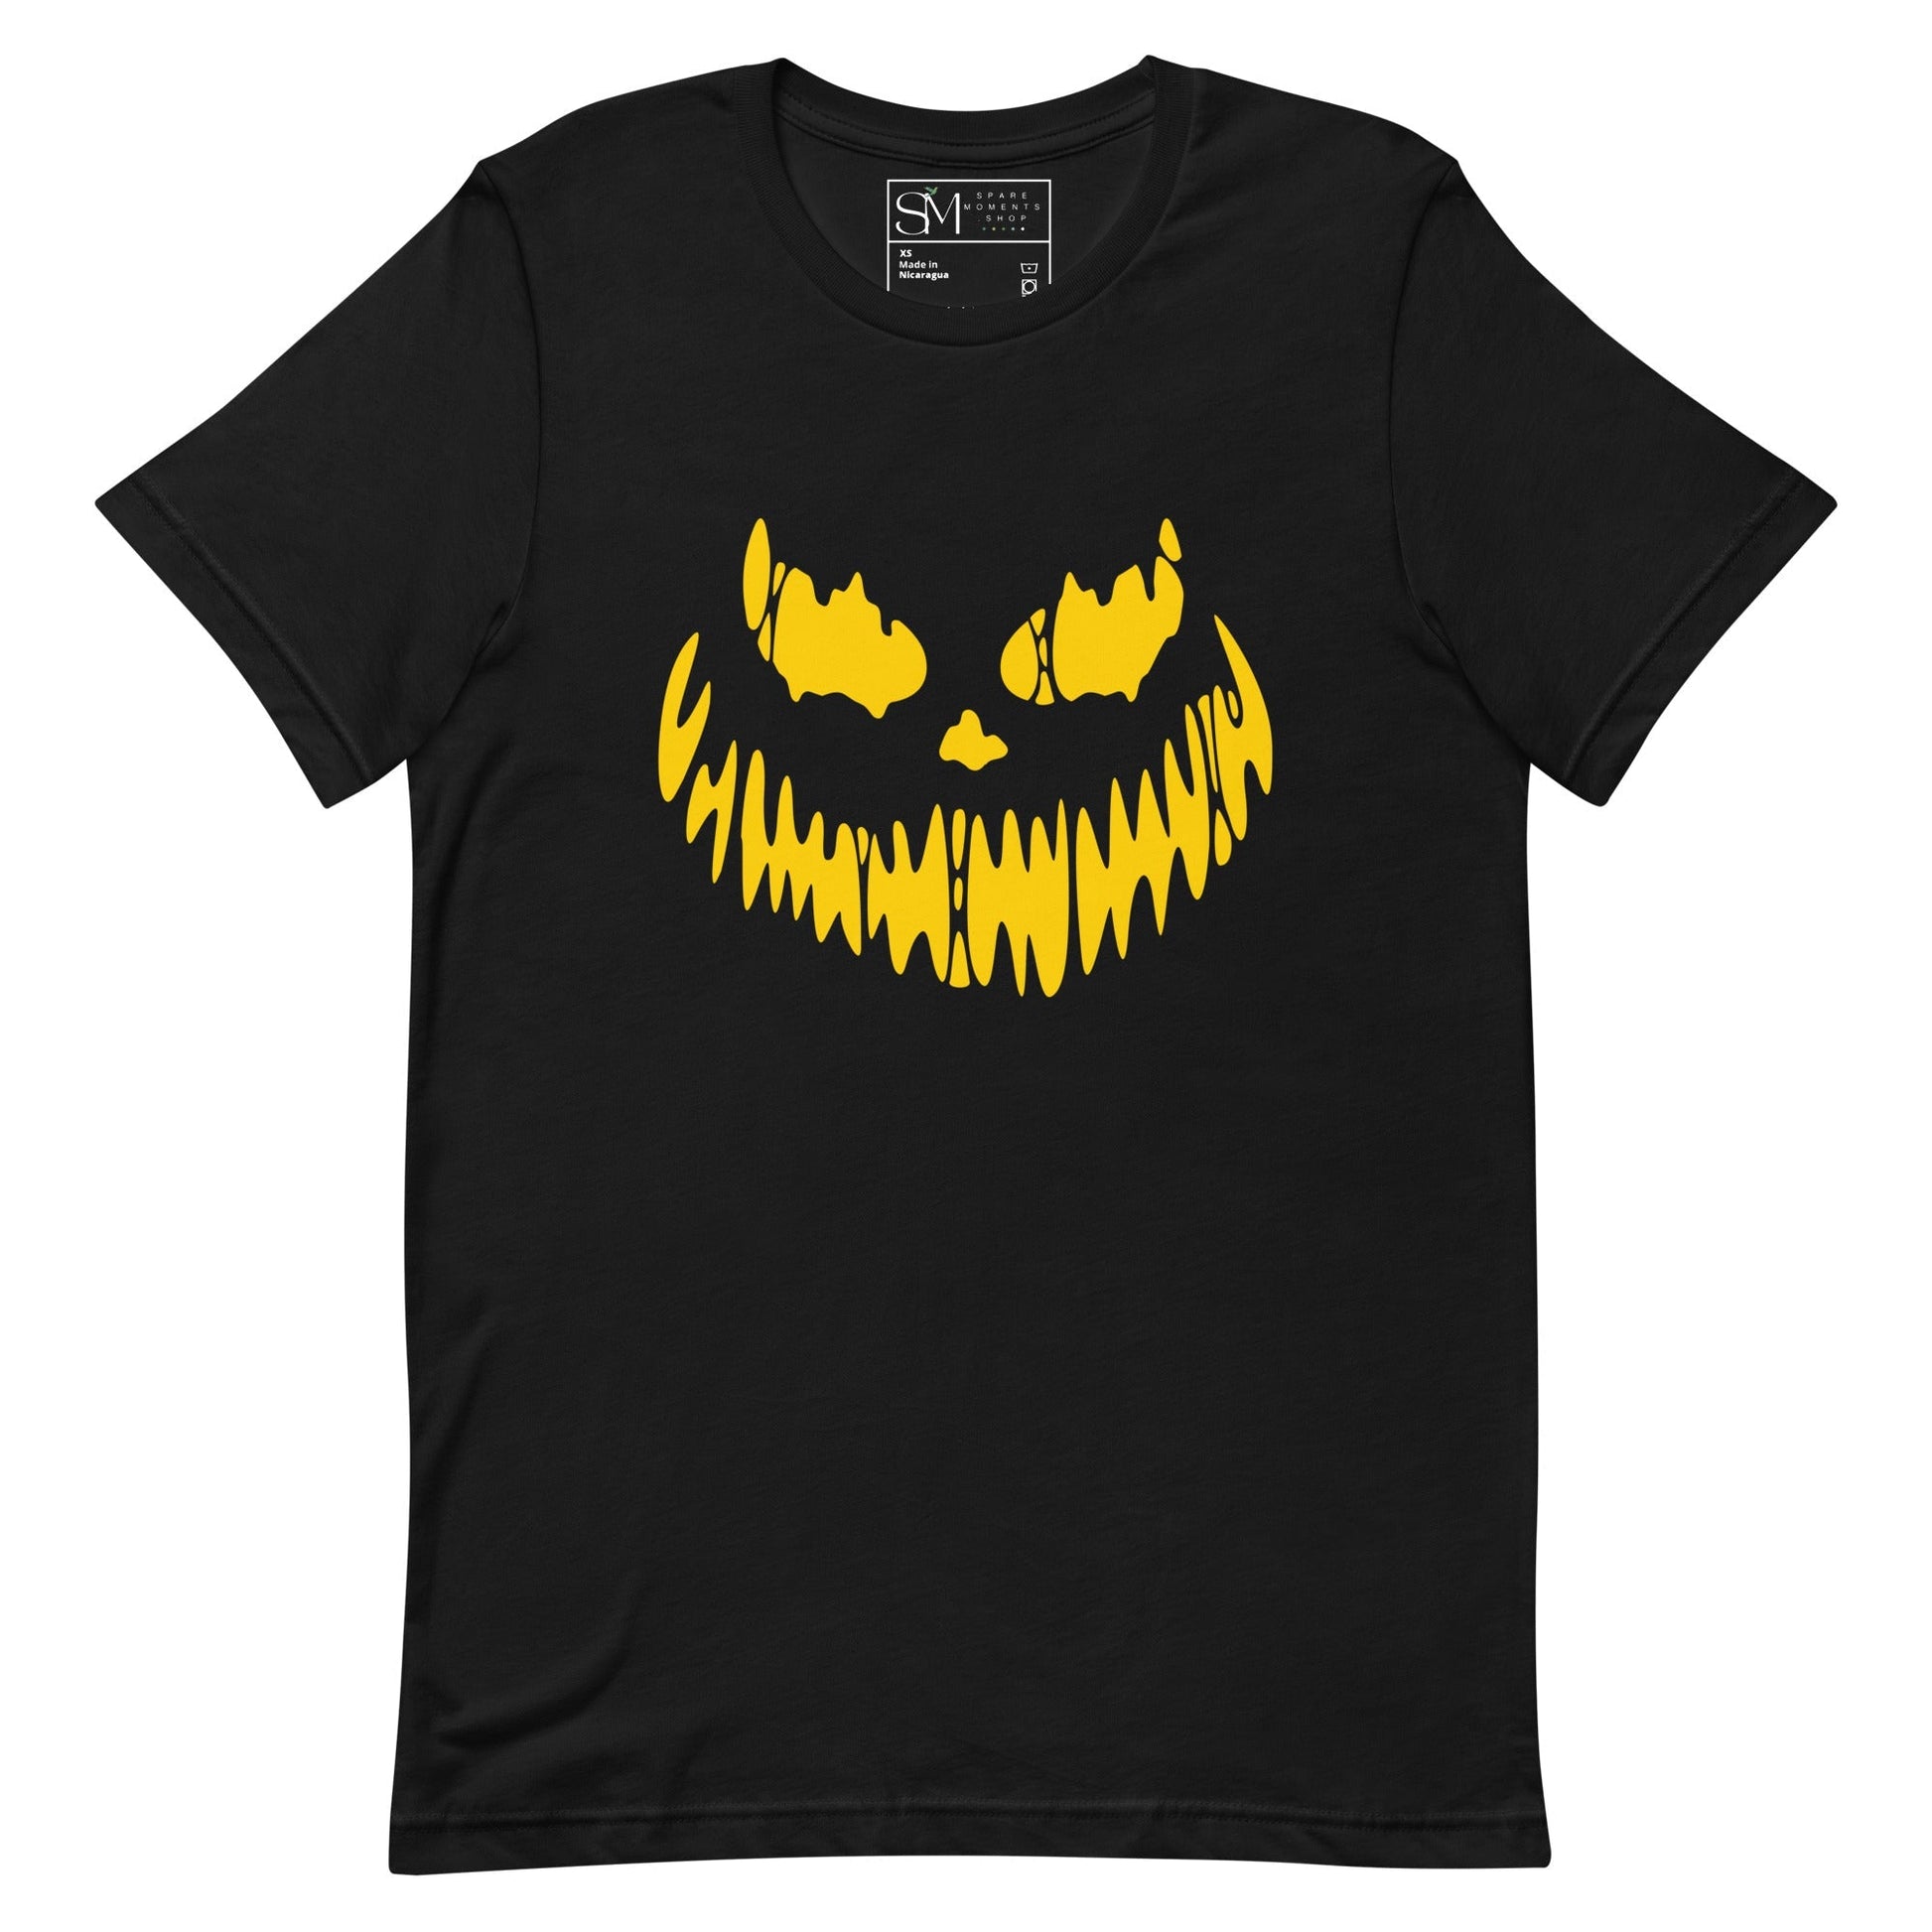 Jack-O-Lantern T-Shirt